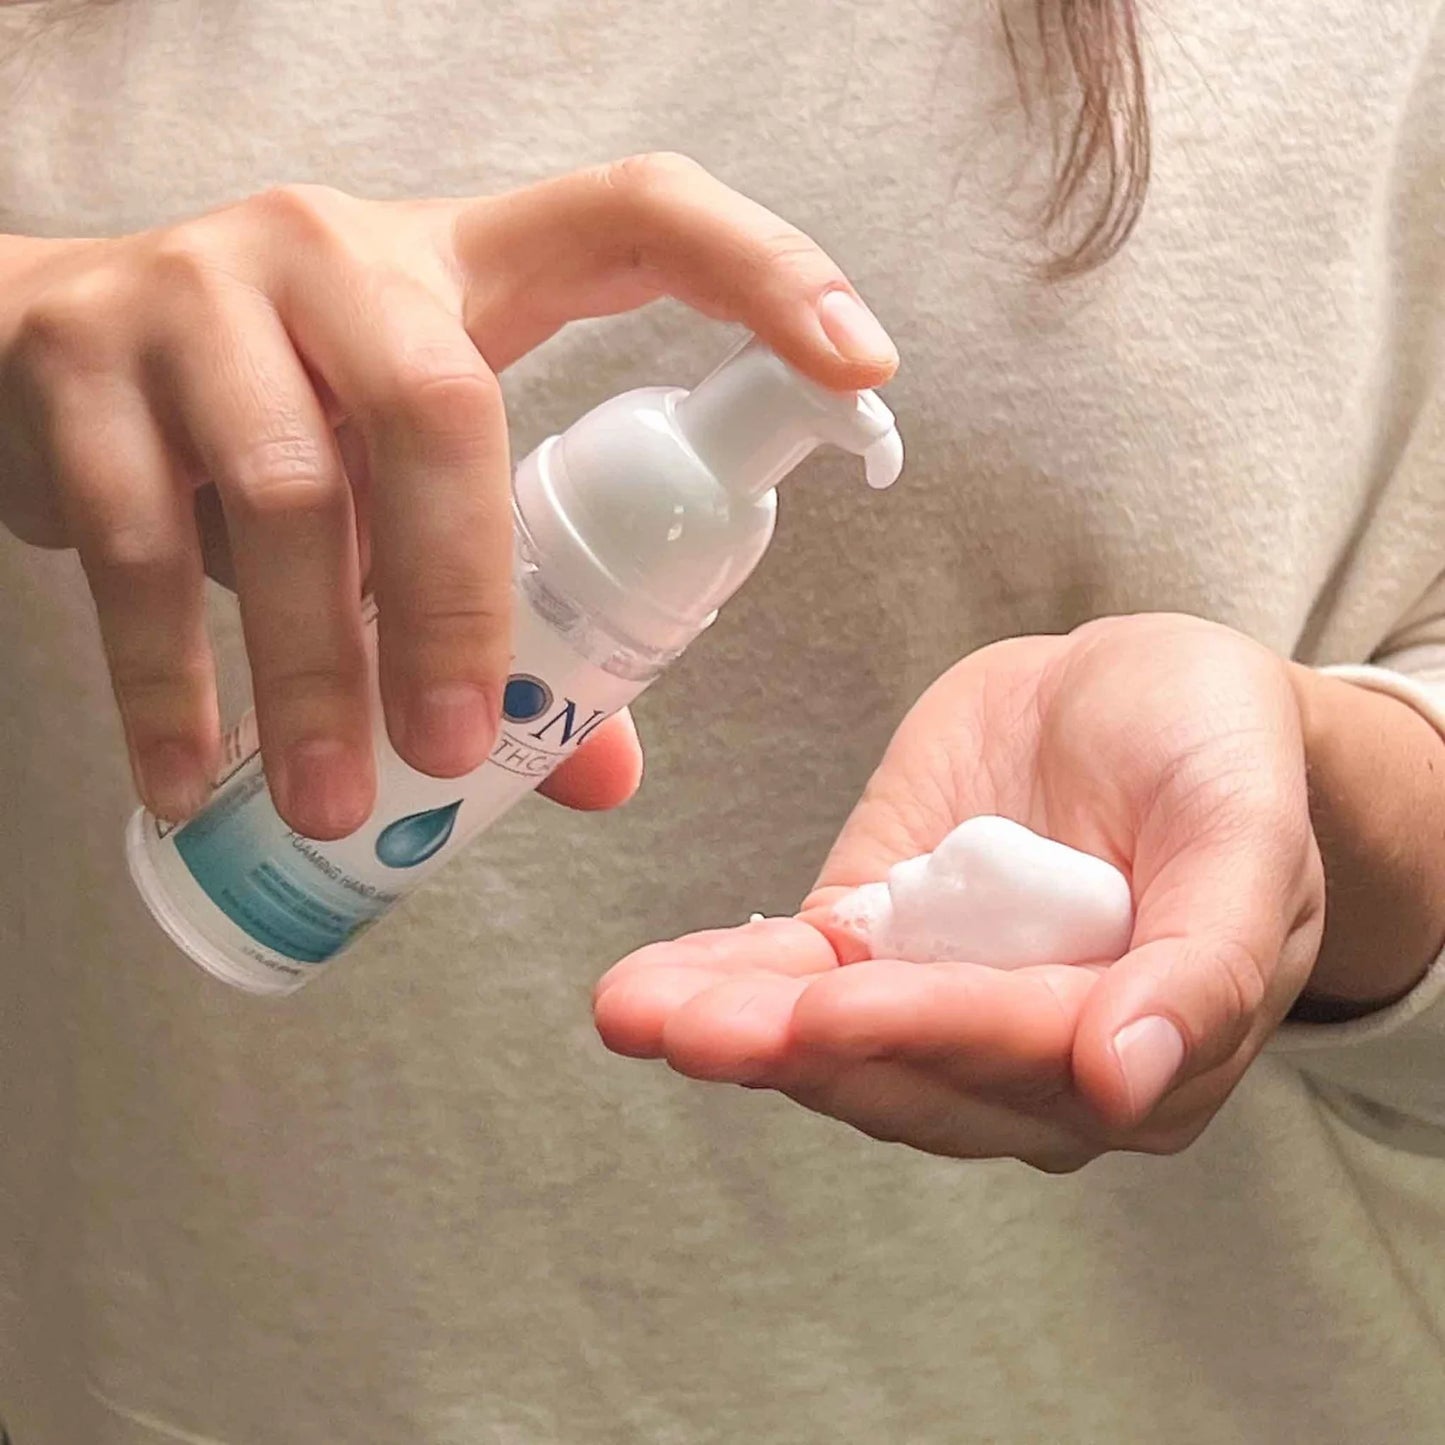 SONO Foaming Hand Sanitizer Bundle